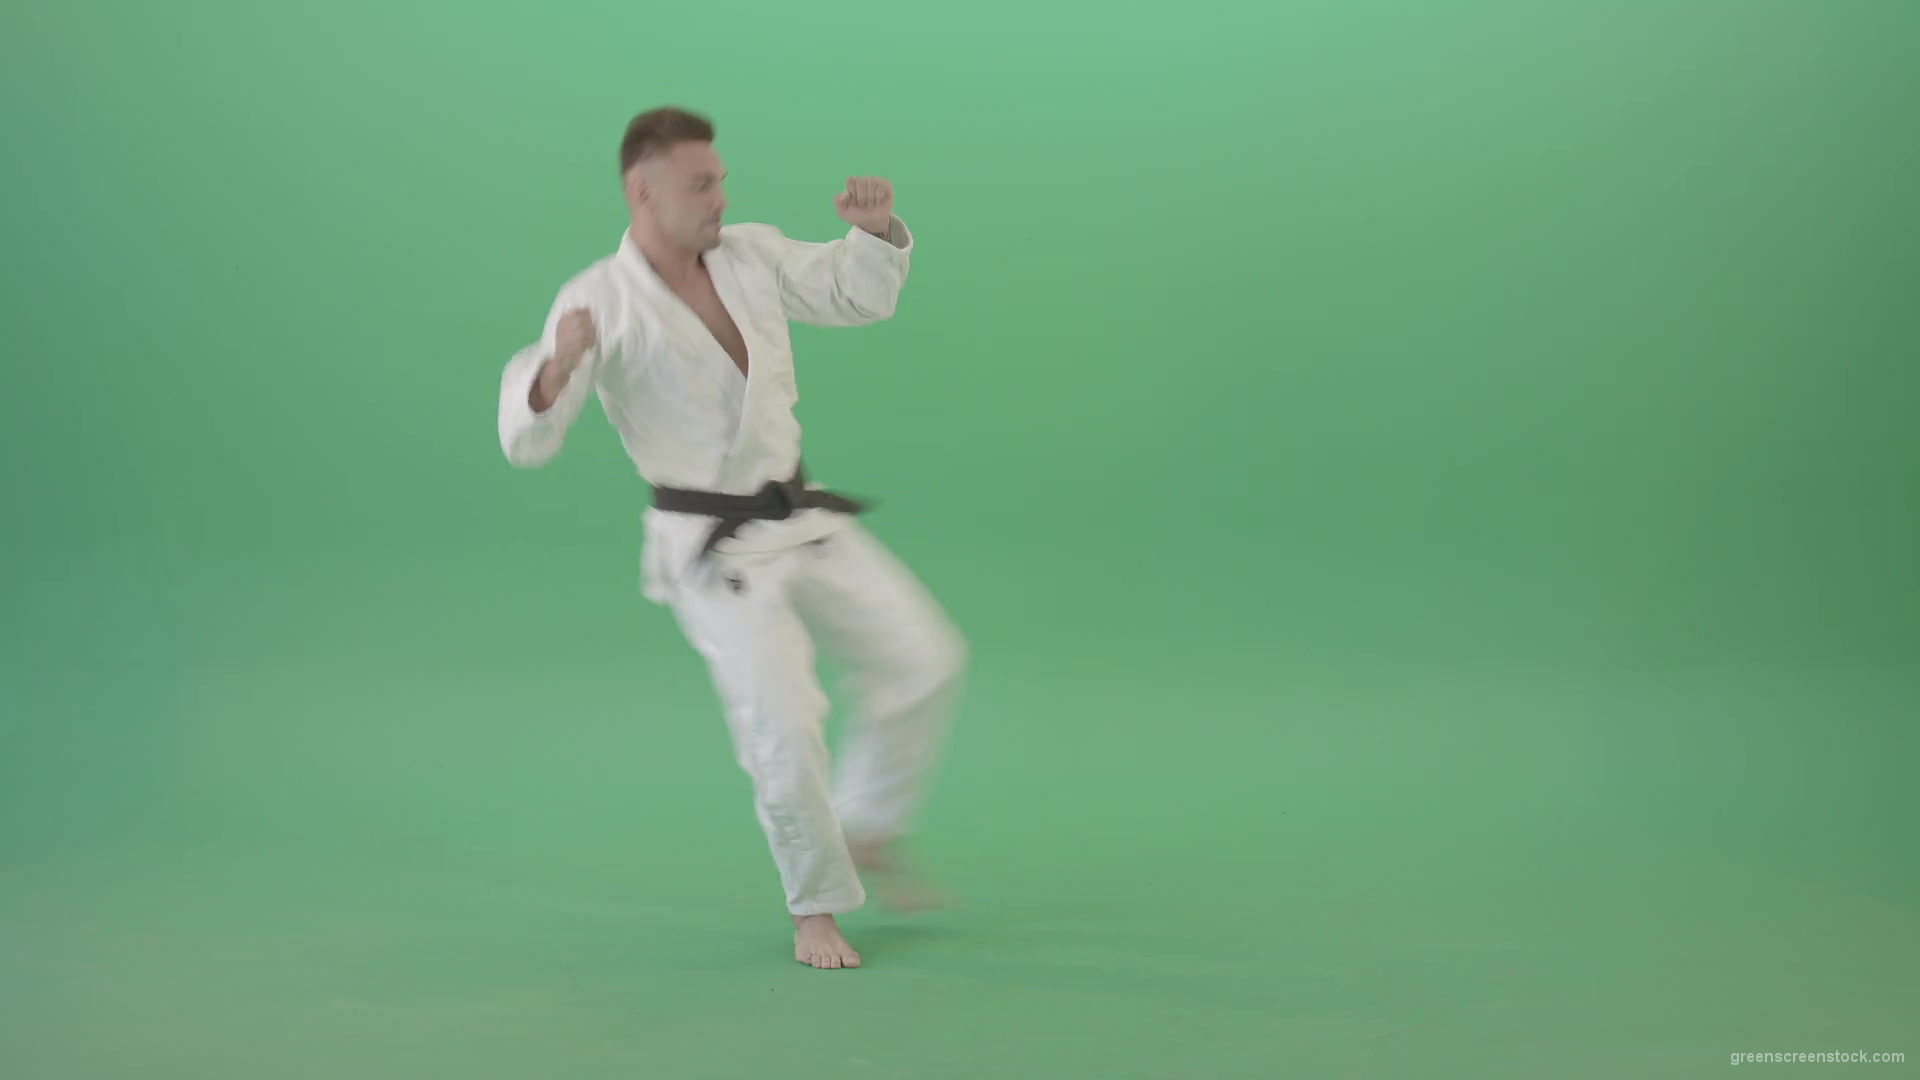 Ju-jutsu-young-man-training-slowly-karate-isolated-on-green-screen-4K-Video-Footage-1920_002 Green Screen Stock